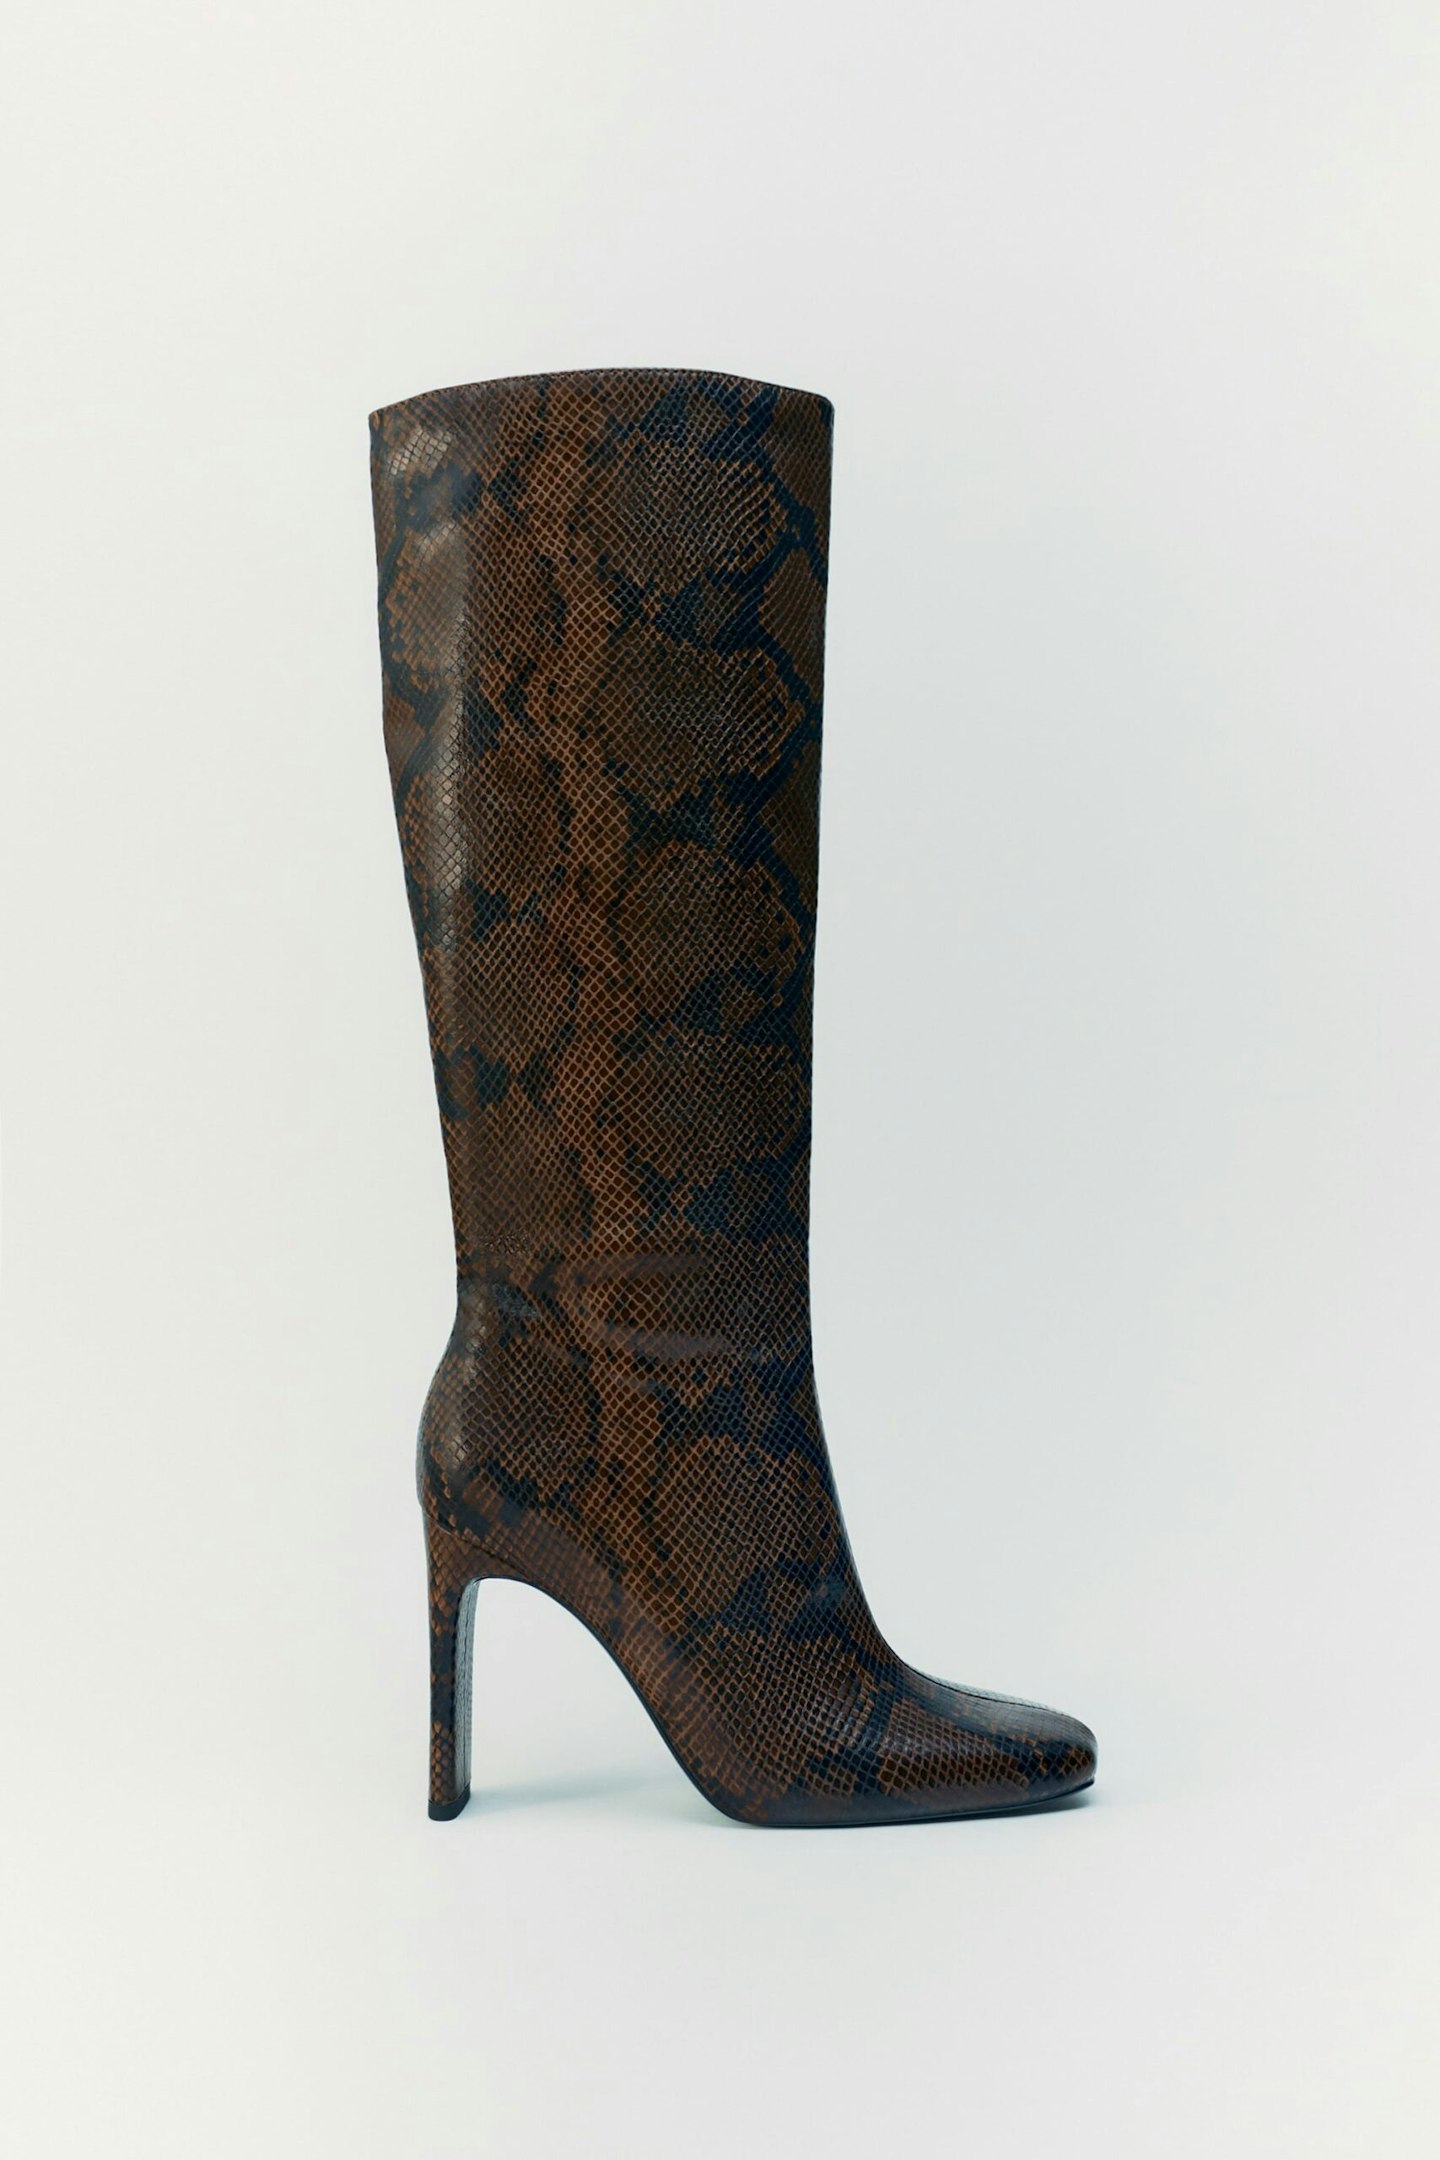 Zara, Animal-Print High Heel Boots